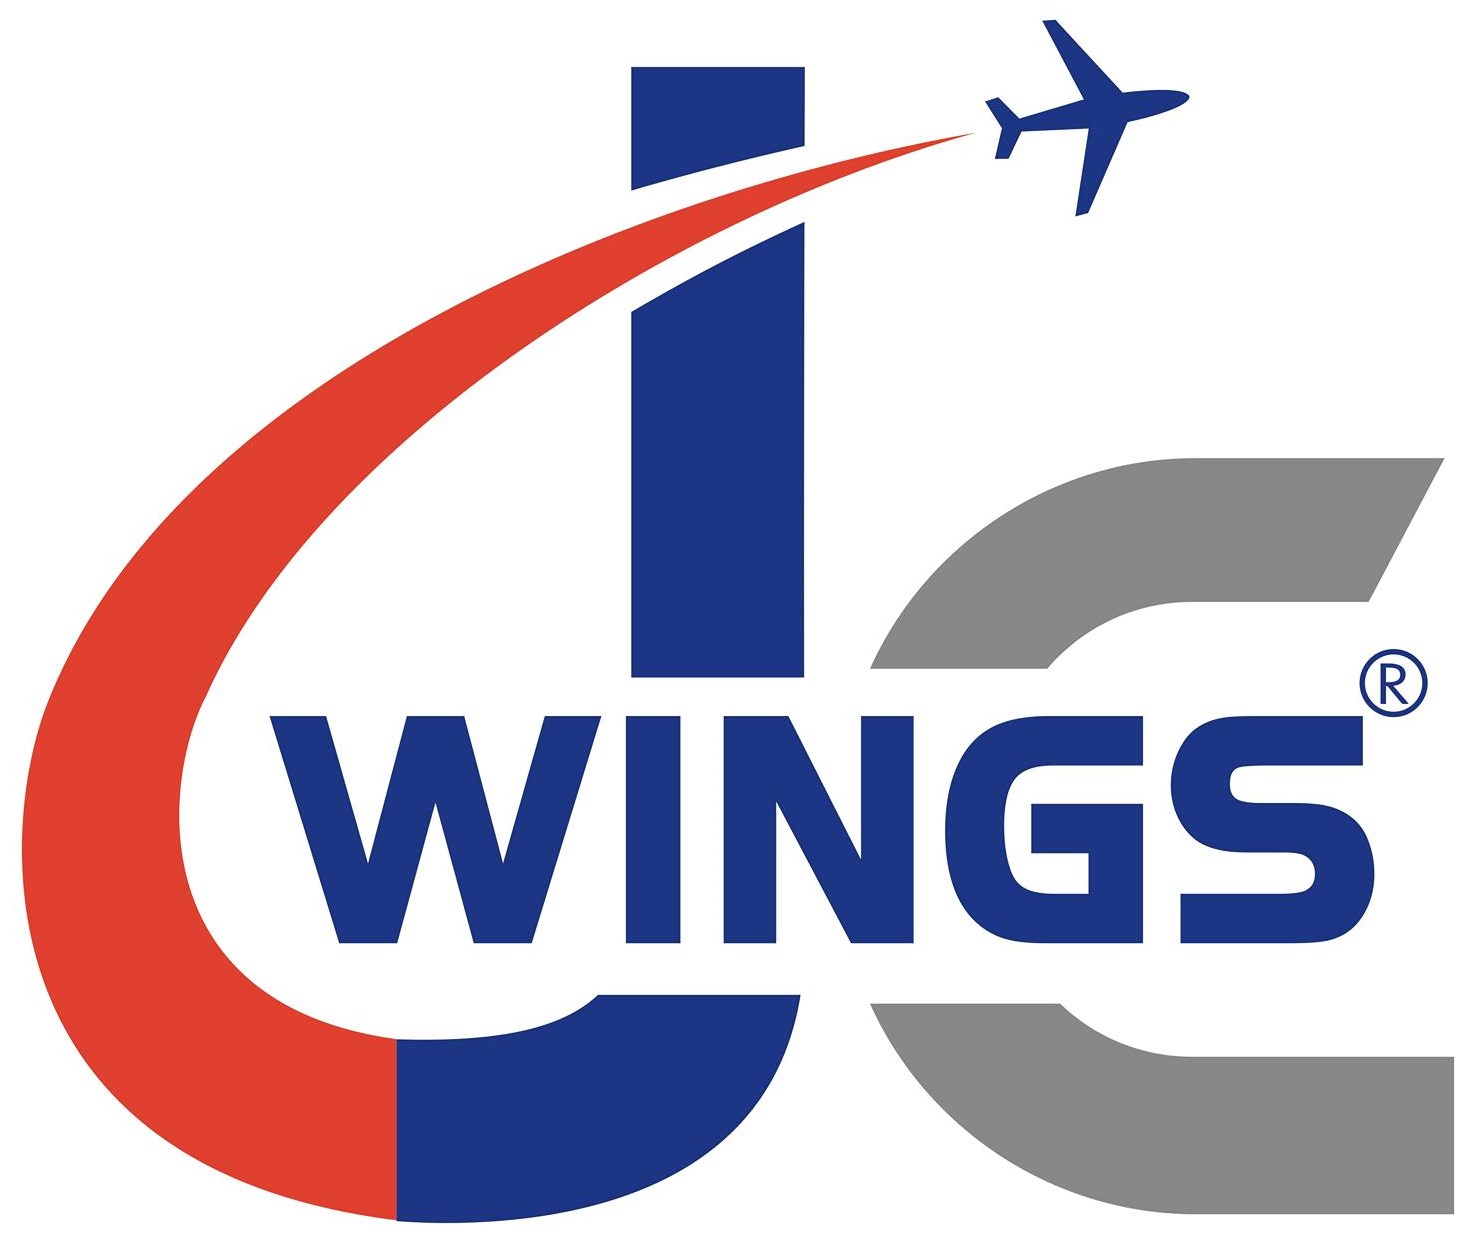 JC Wings (new logo)
Keywords: JC Wings